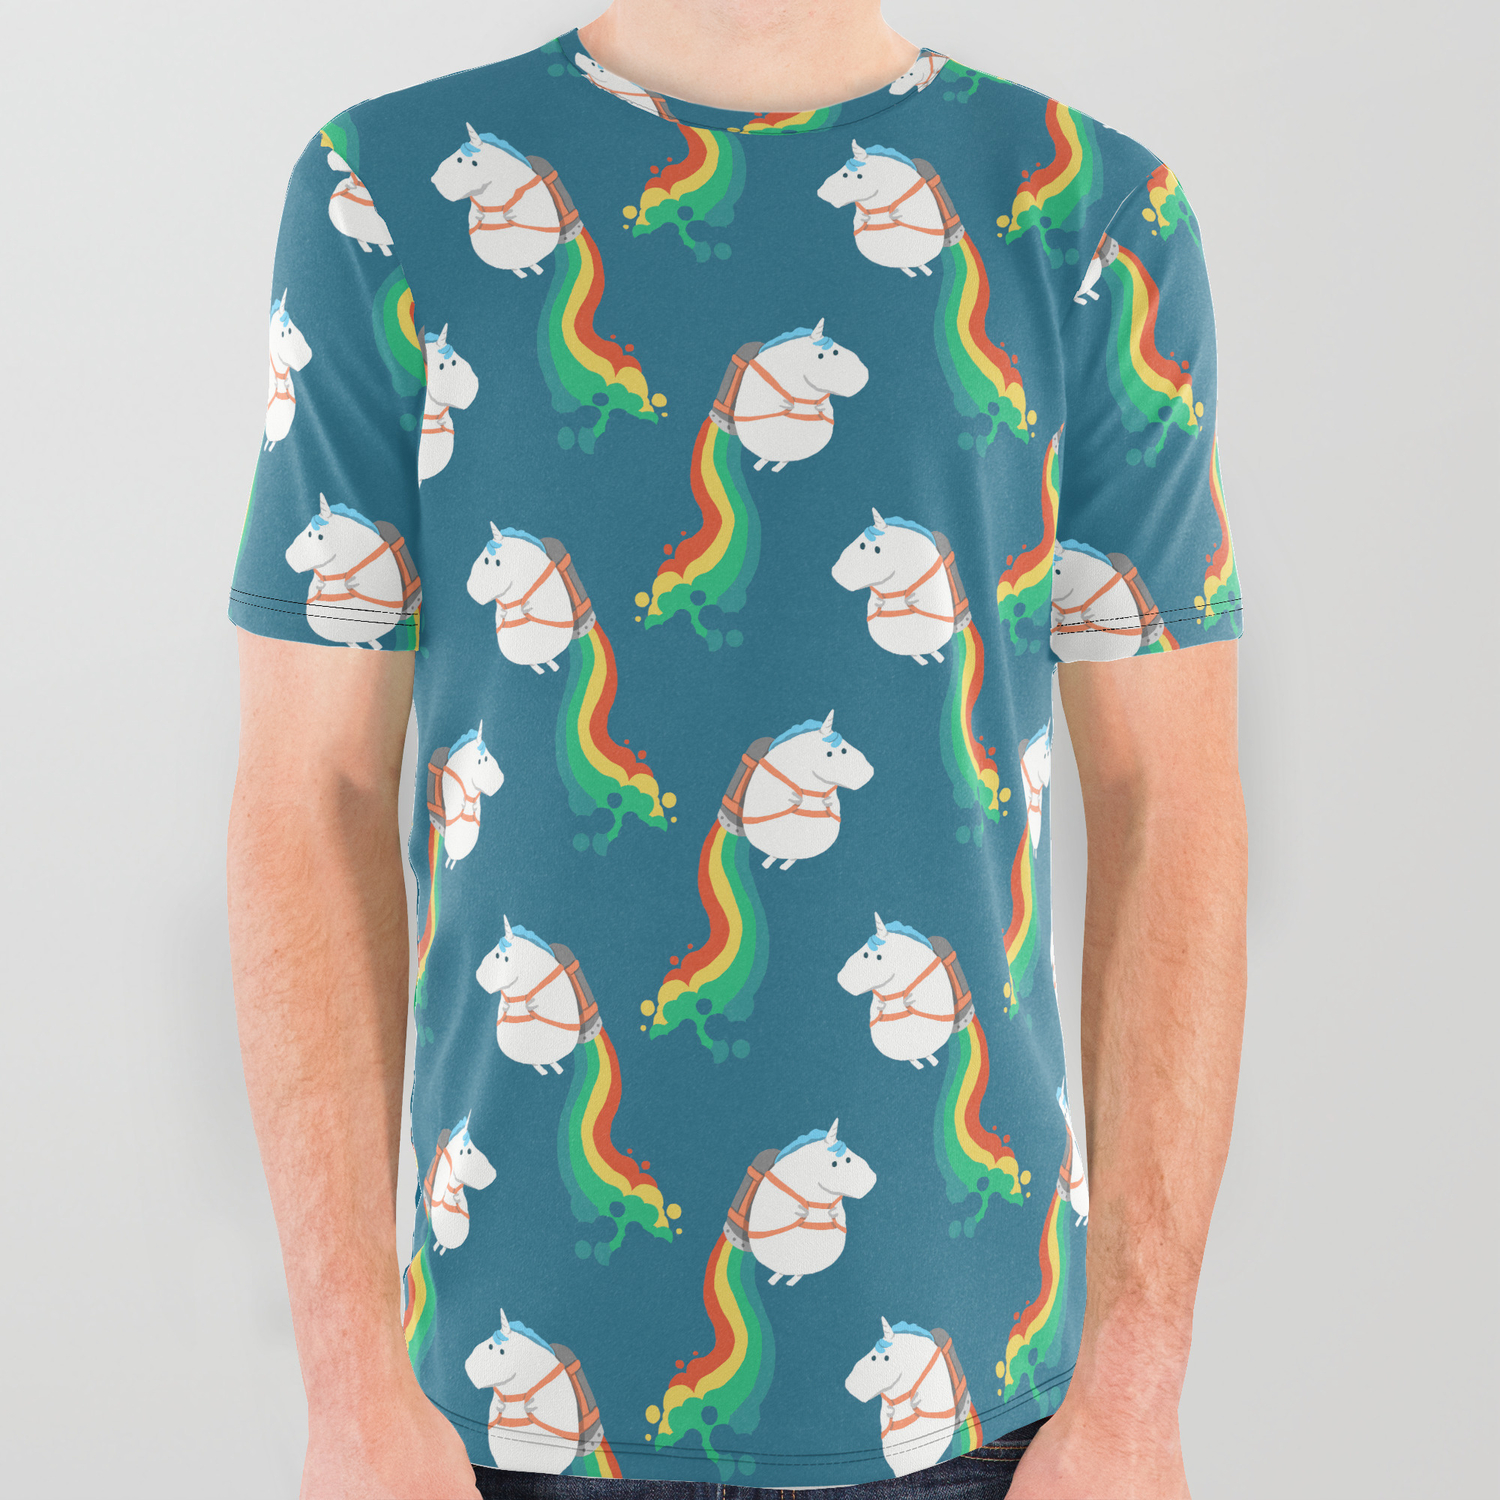 Colorful Chubby Unicorn on a Jetpack T-Shirt Rainbow Glitter Tee Shirt